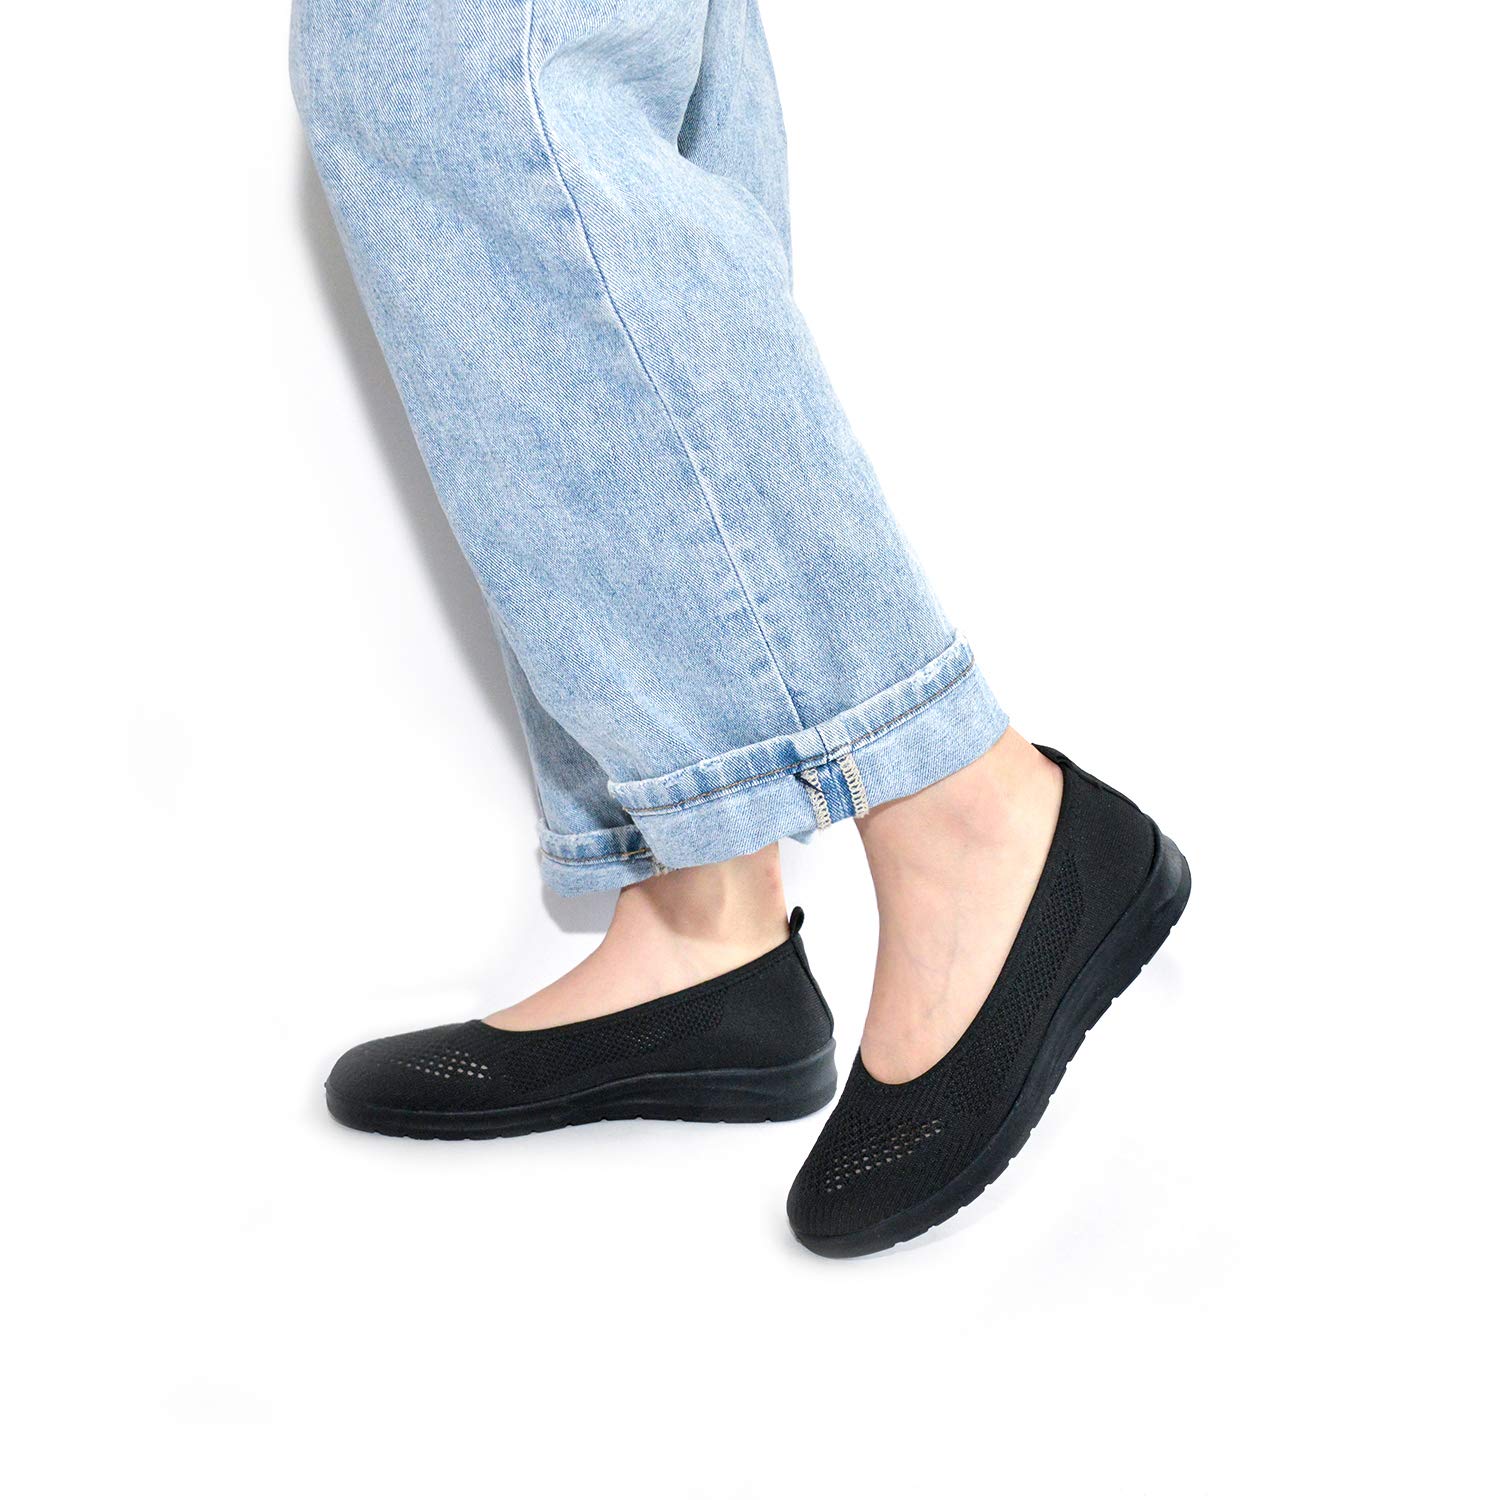 adeilisa Walking Shoes Women Slip On Sneakers Comfortable Breathable Knit Flats,Black 8